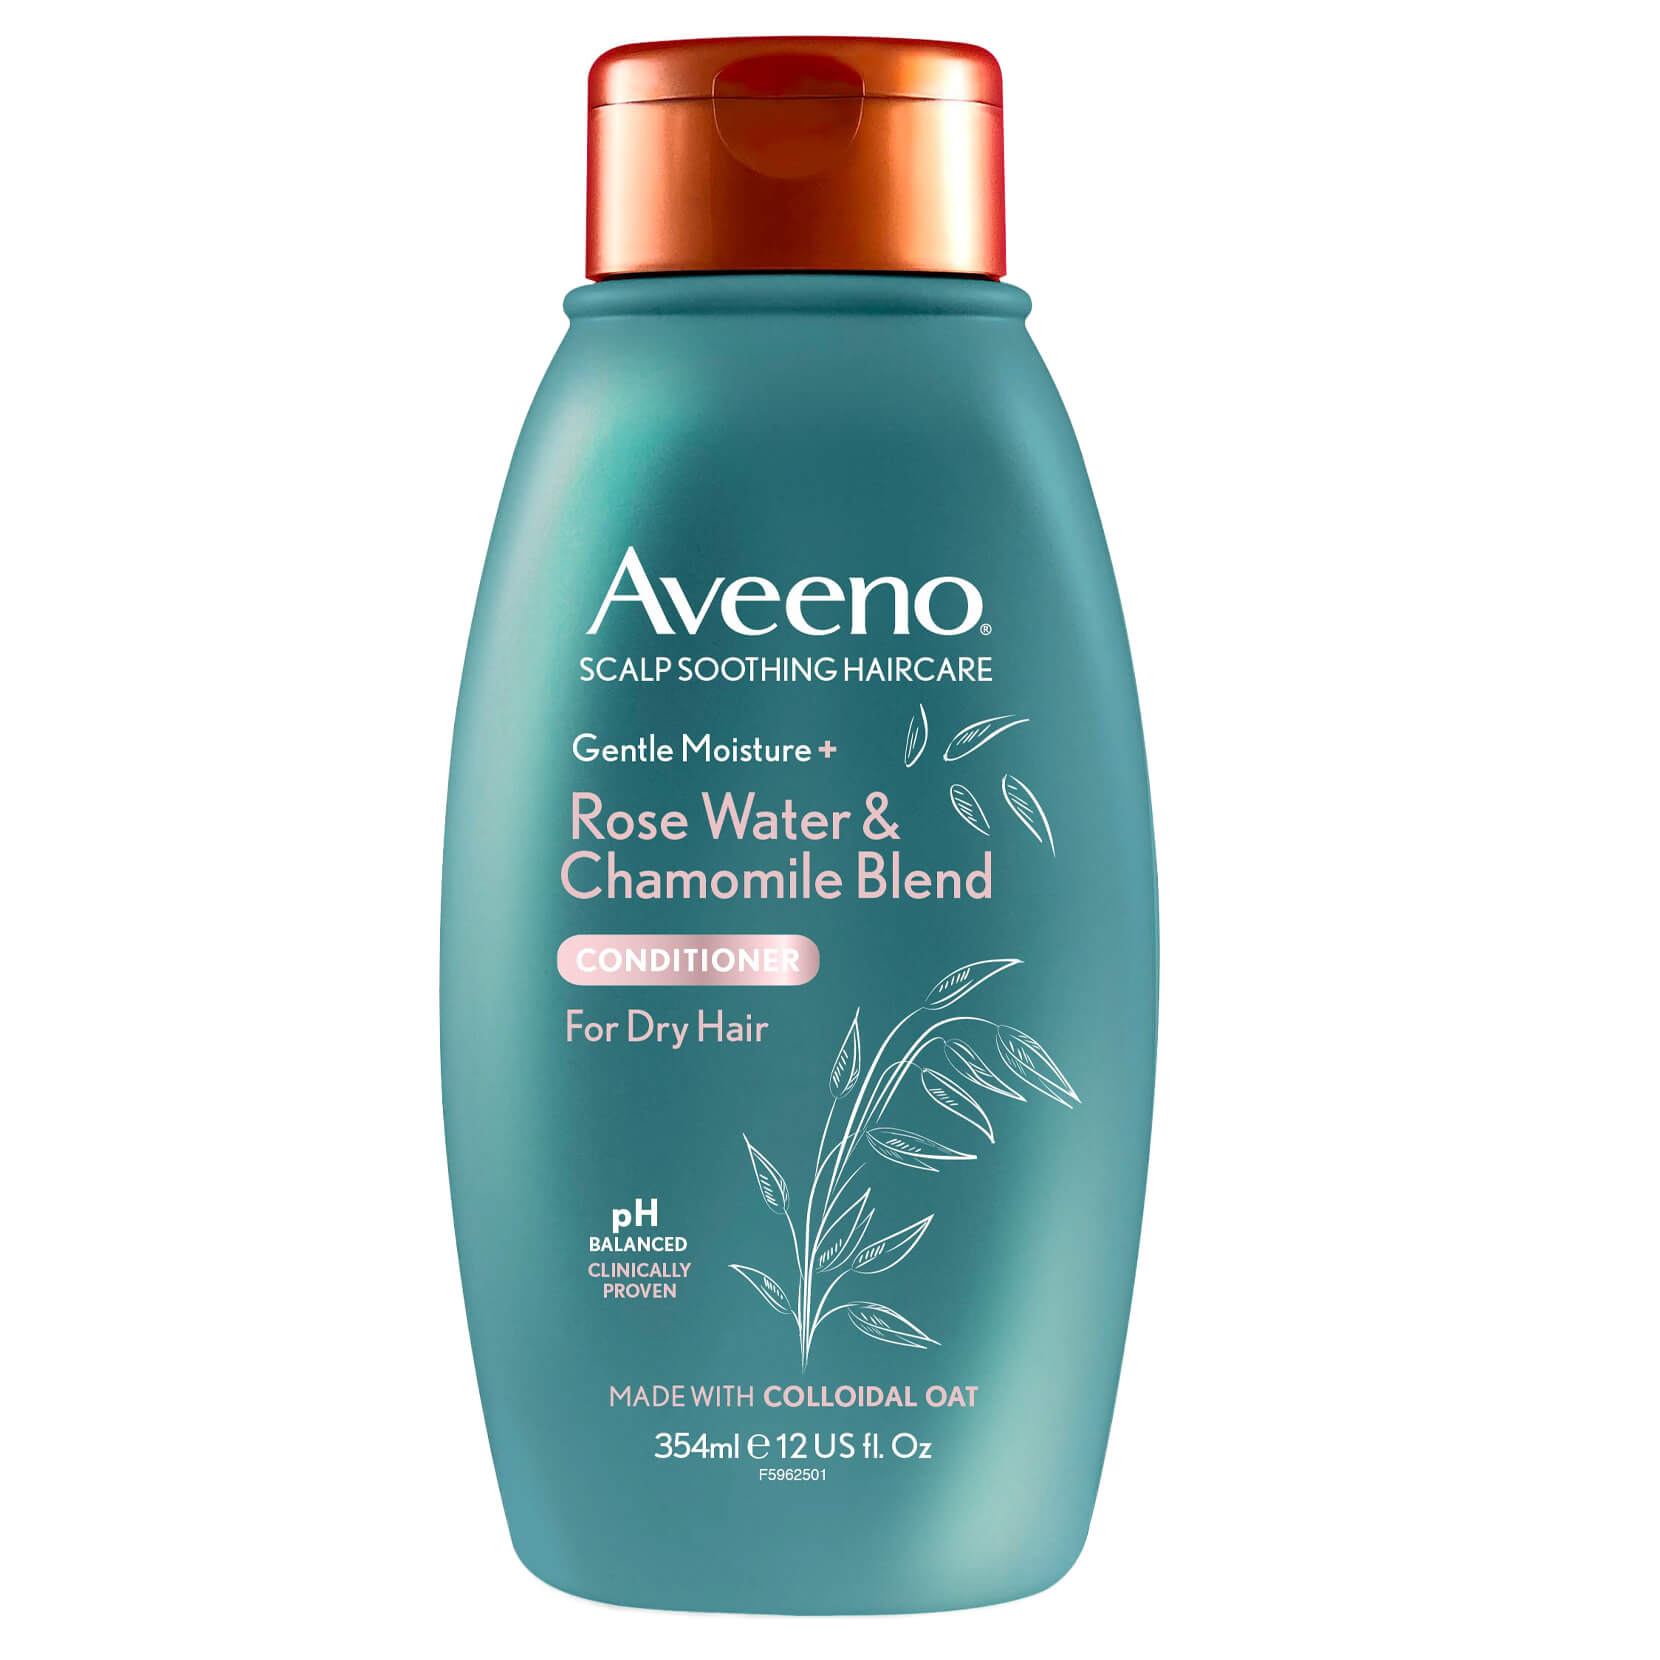 Aveeno Gentle Moisture+ Rose Water & Chamomile Blend Conditioner - 354ml